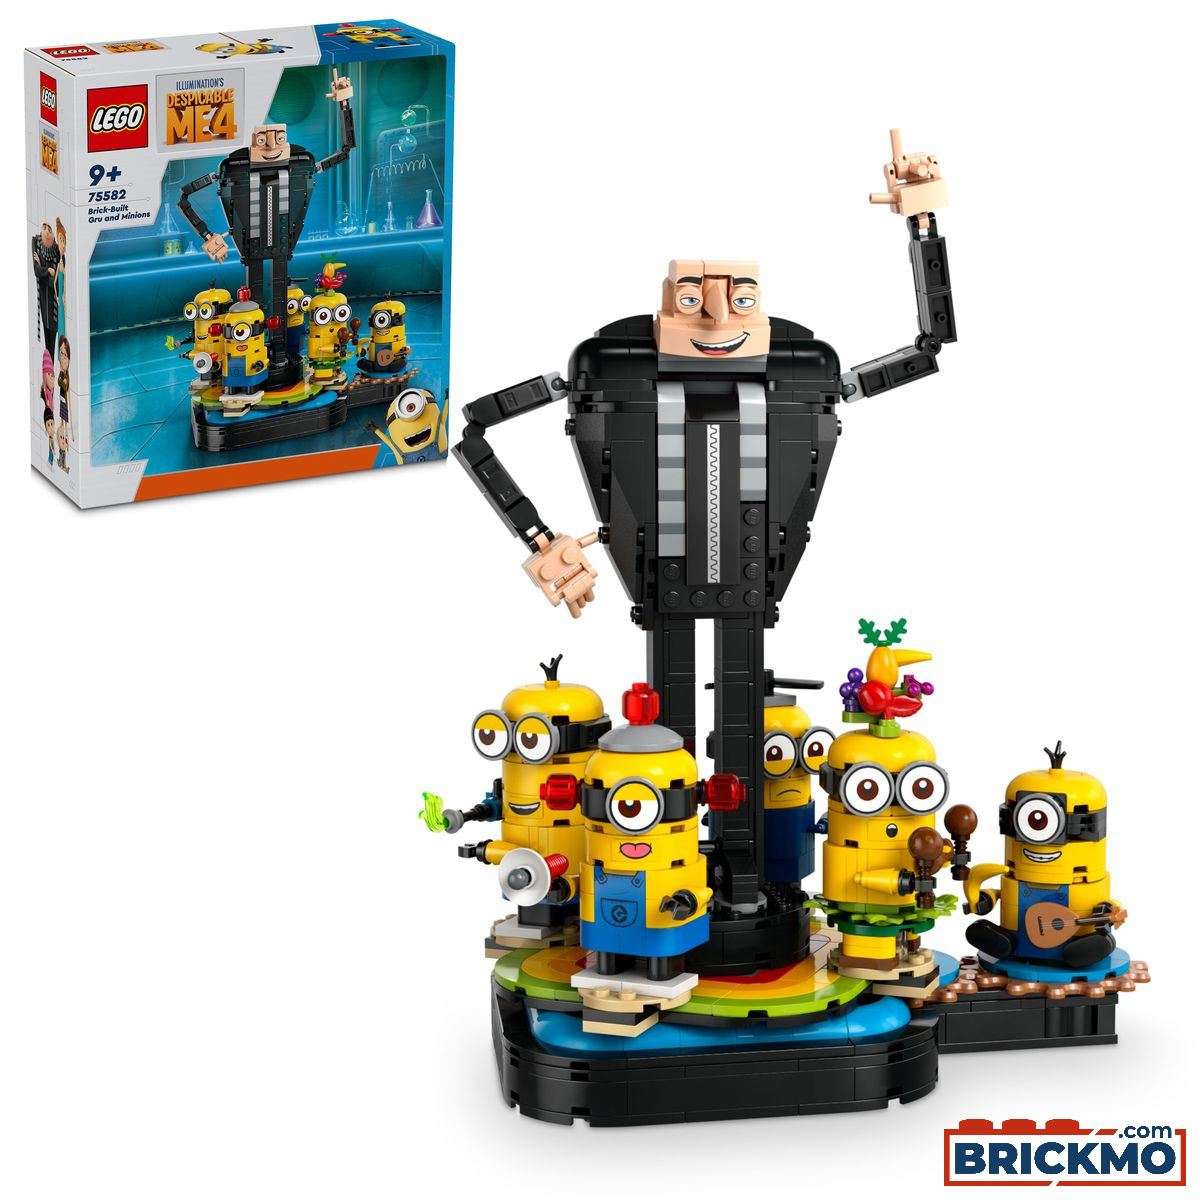 LEGO Minions 75582 Brick-Built Gru and Minions 75582